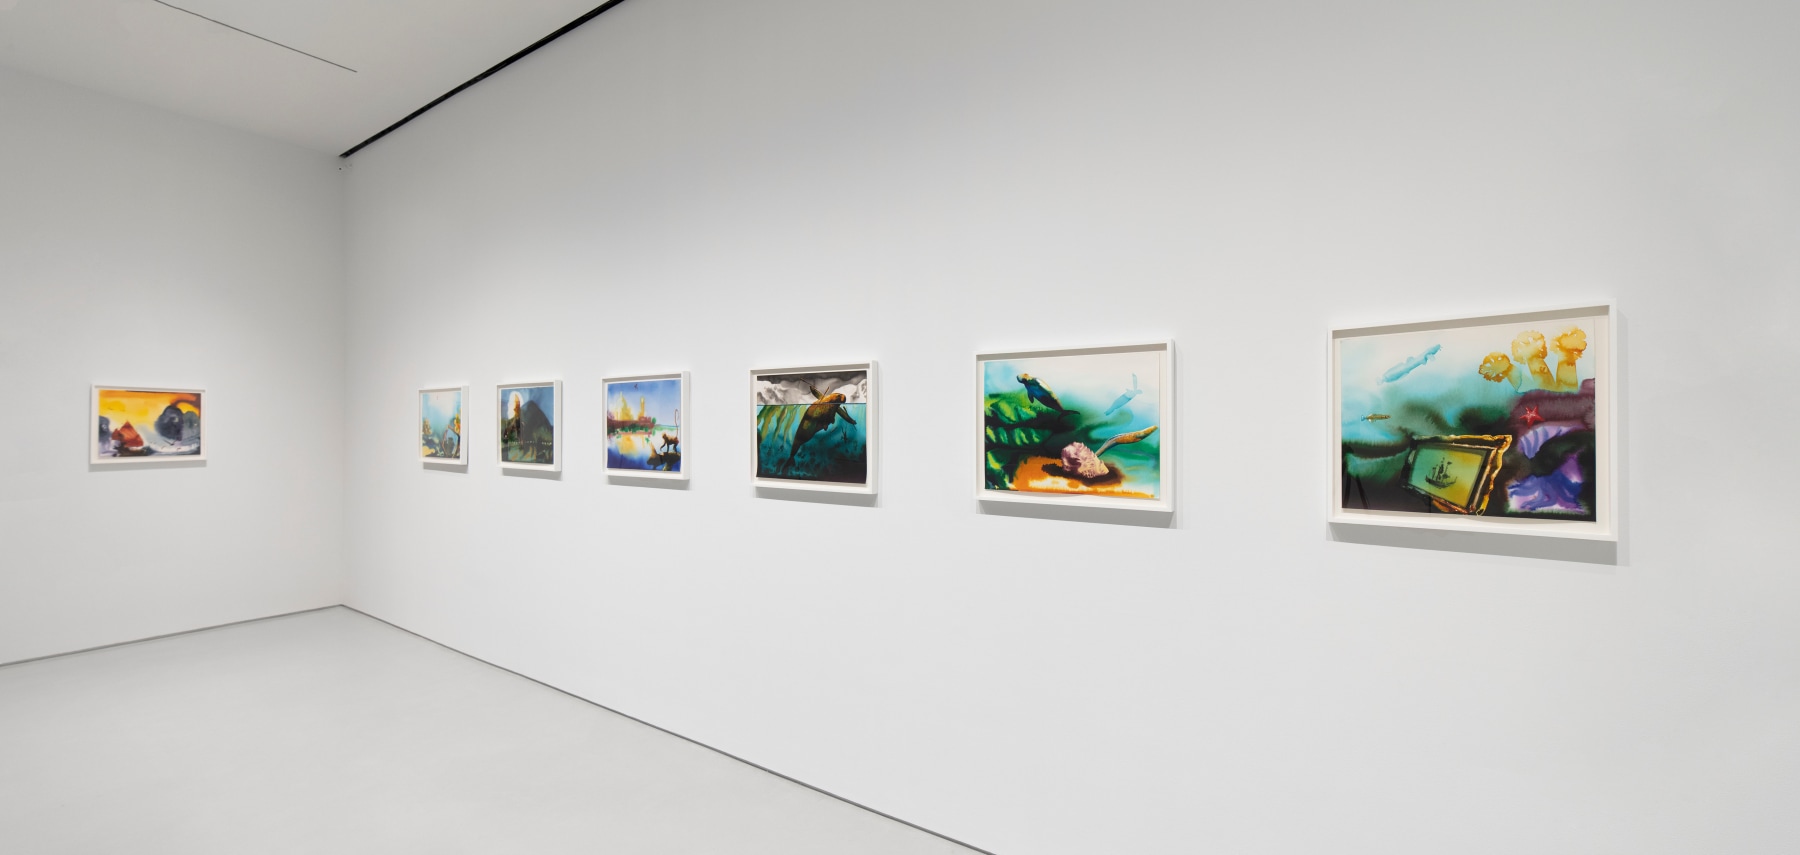 Framed watercolors of varying underwater scenes hang on white gallery walls